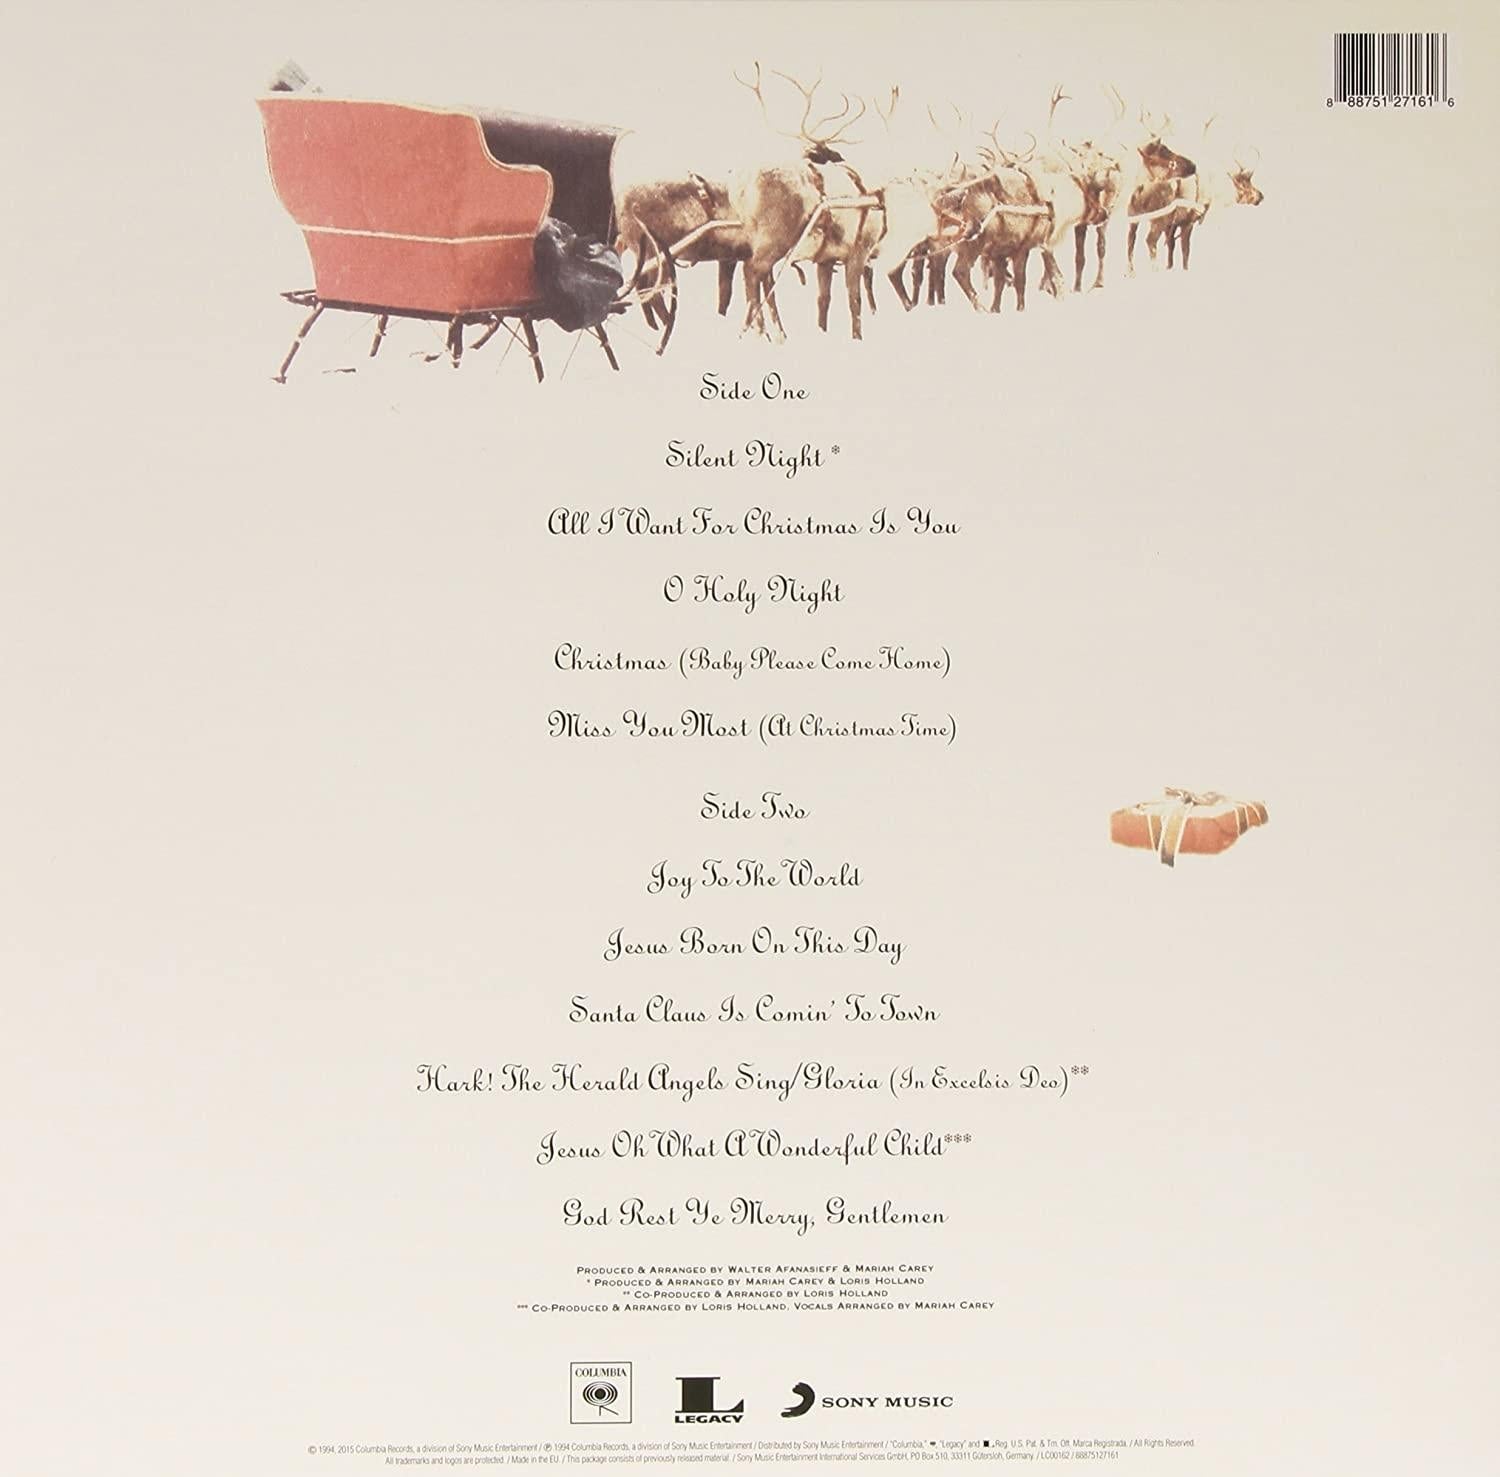 Mariah Carey - Merry Christmas (Deluxe Anniversary Edition, Red Vinyl) (LP) - Joco Records